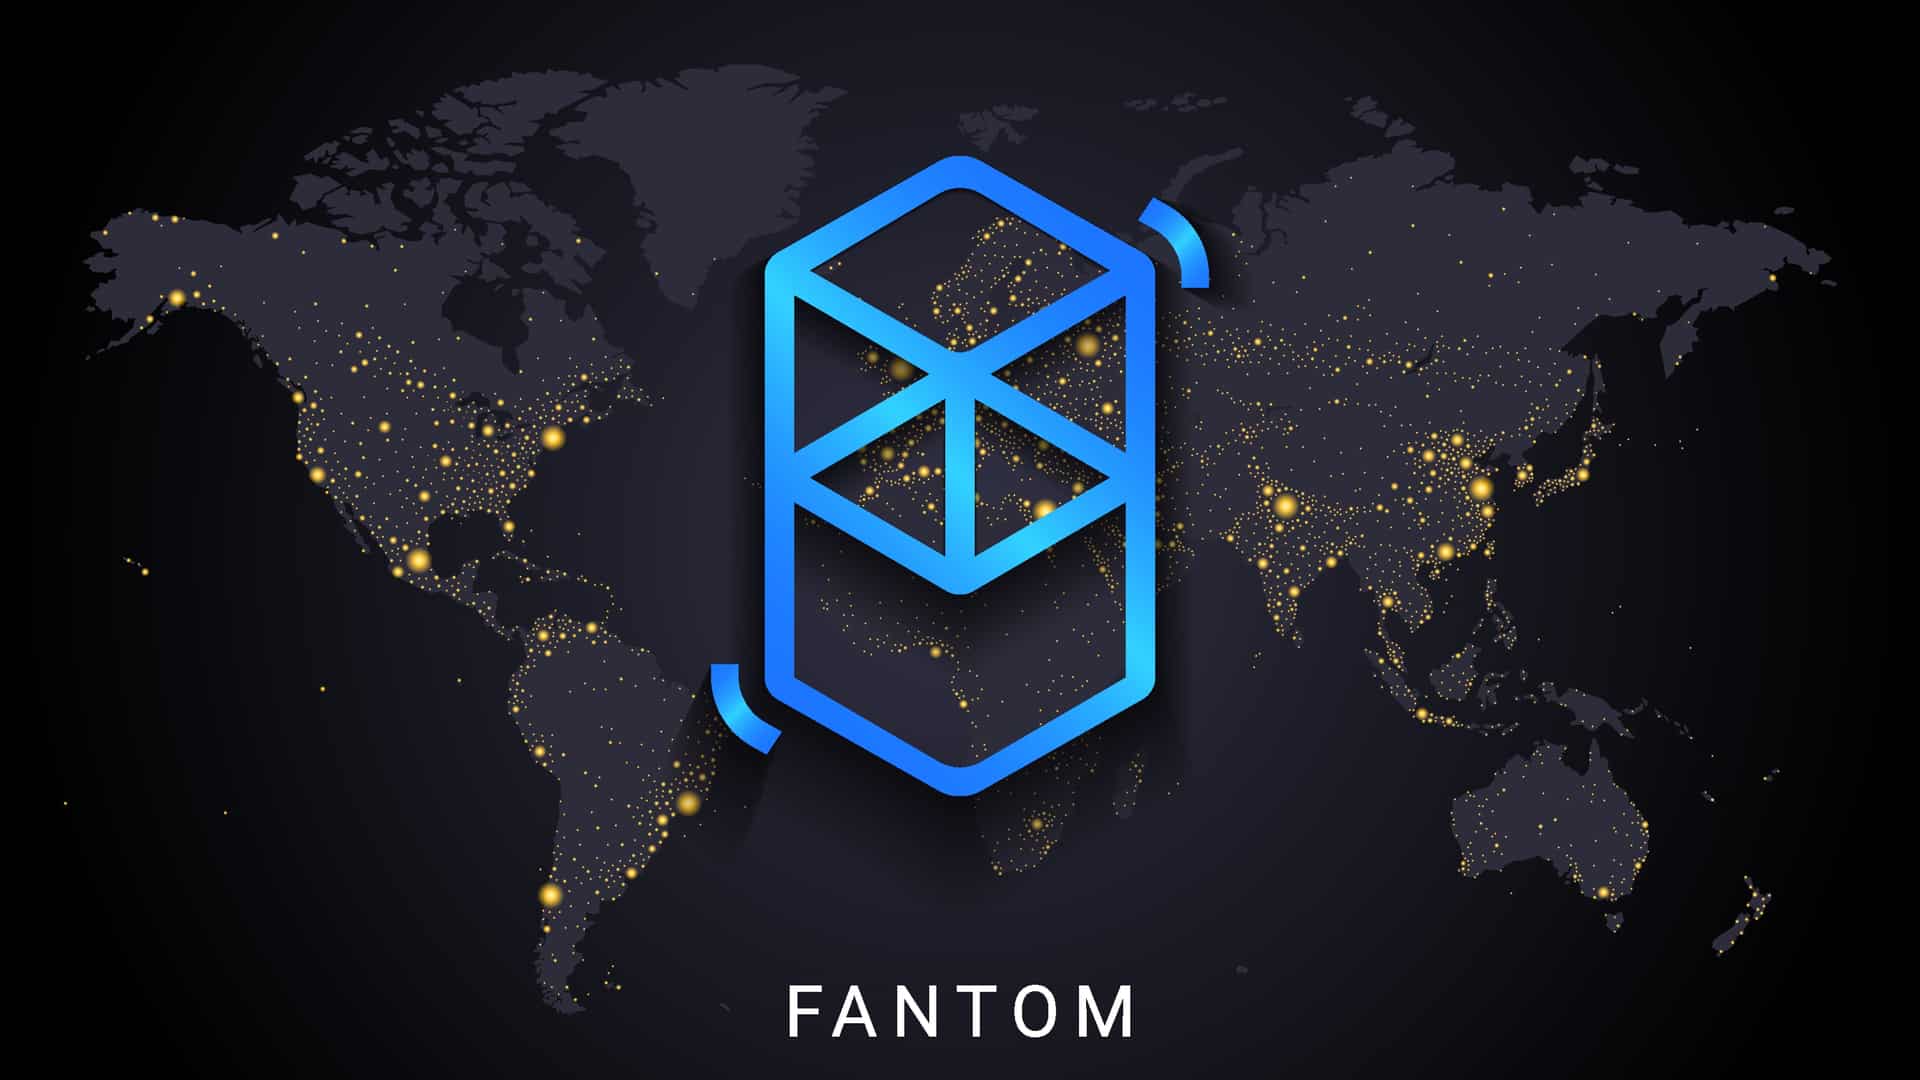 Blockchain Fantom is a huge success